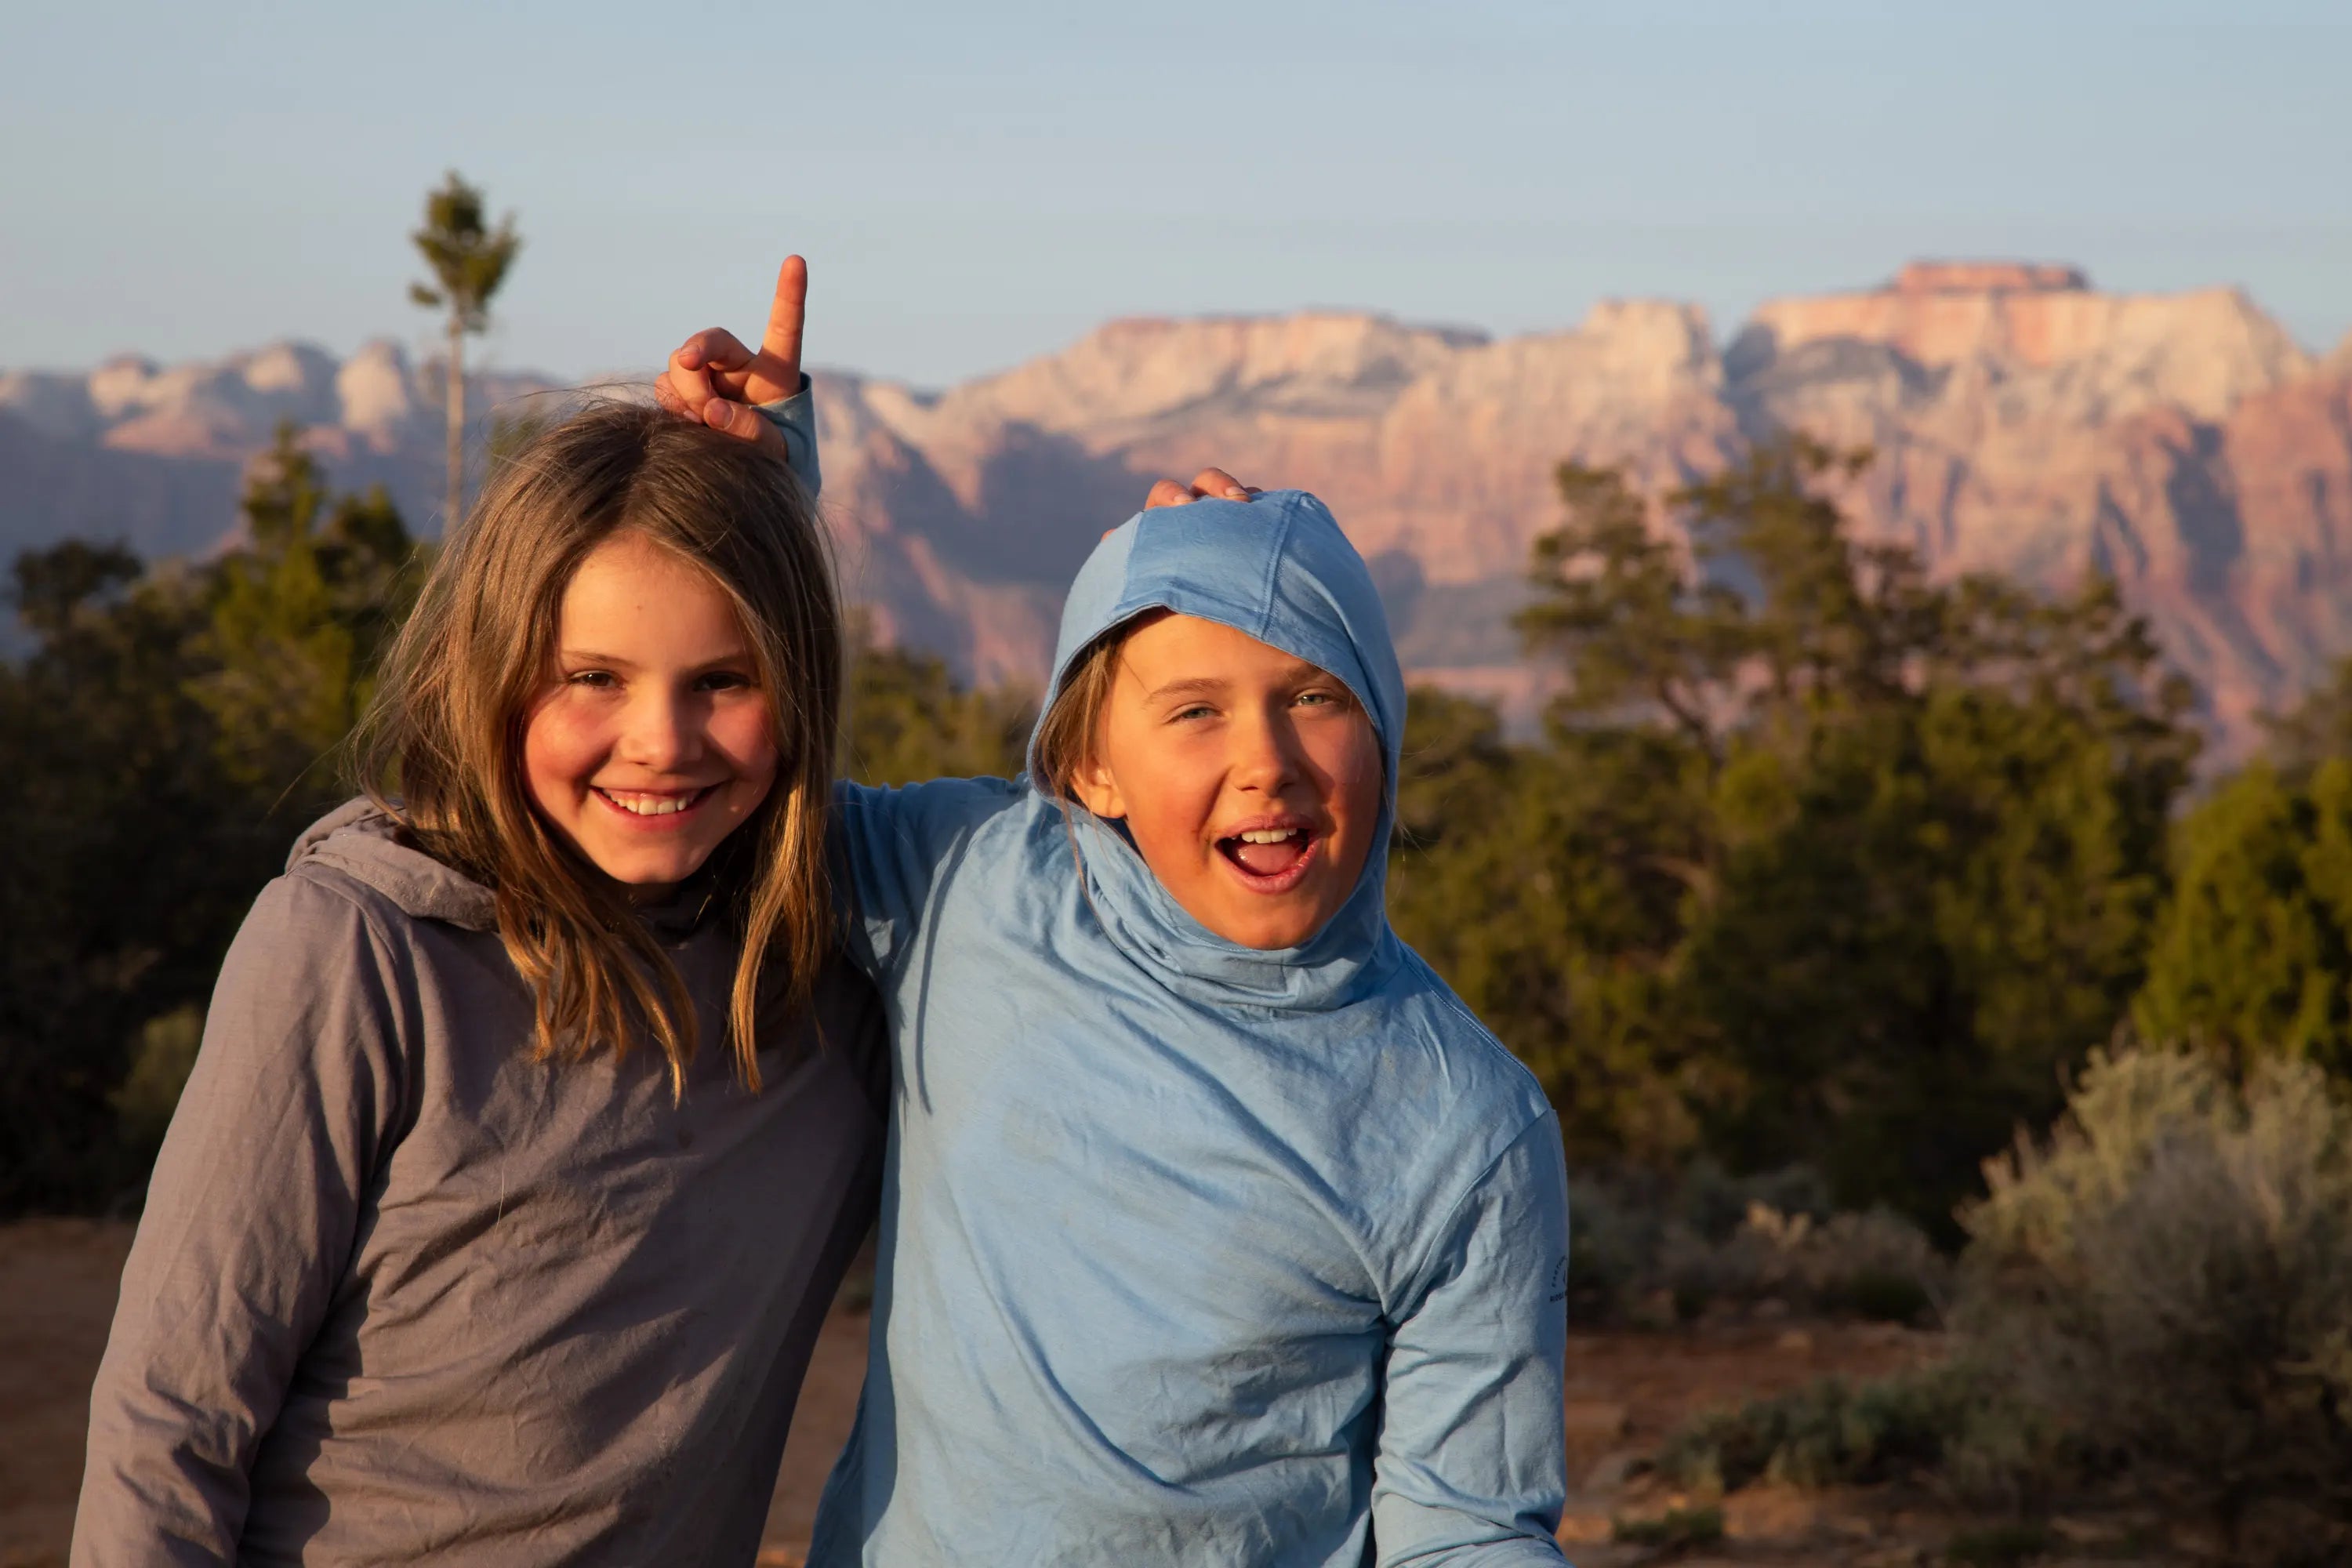 two kids smile wearing Ridge Merino Solstice sun hoodies in the desert